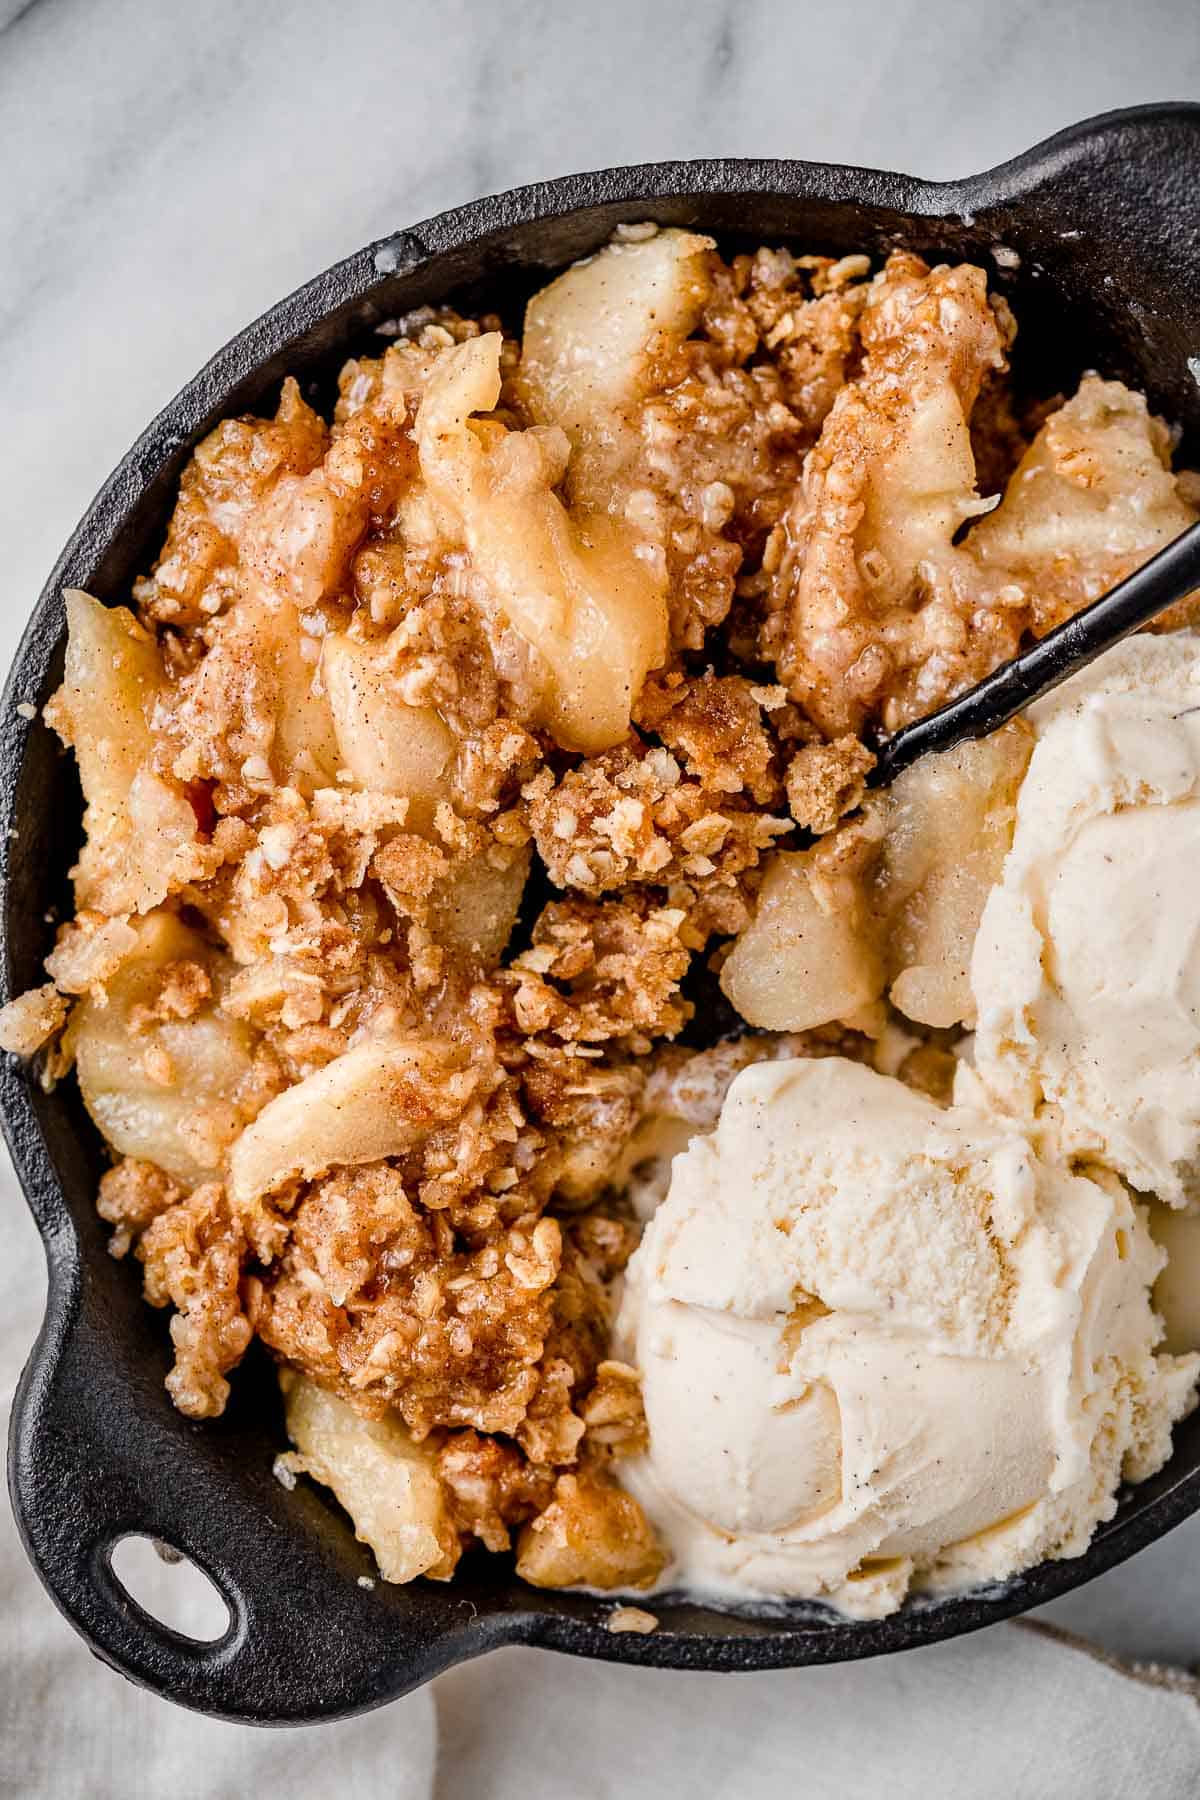 Apple crisp in a bowl with vanilla ice cream.